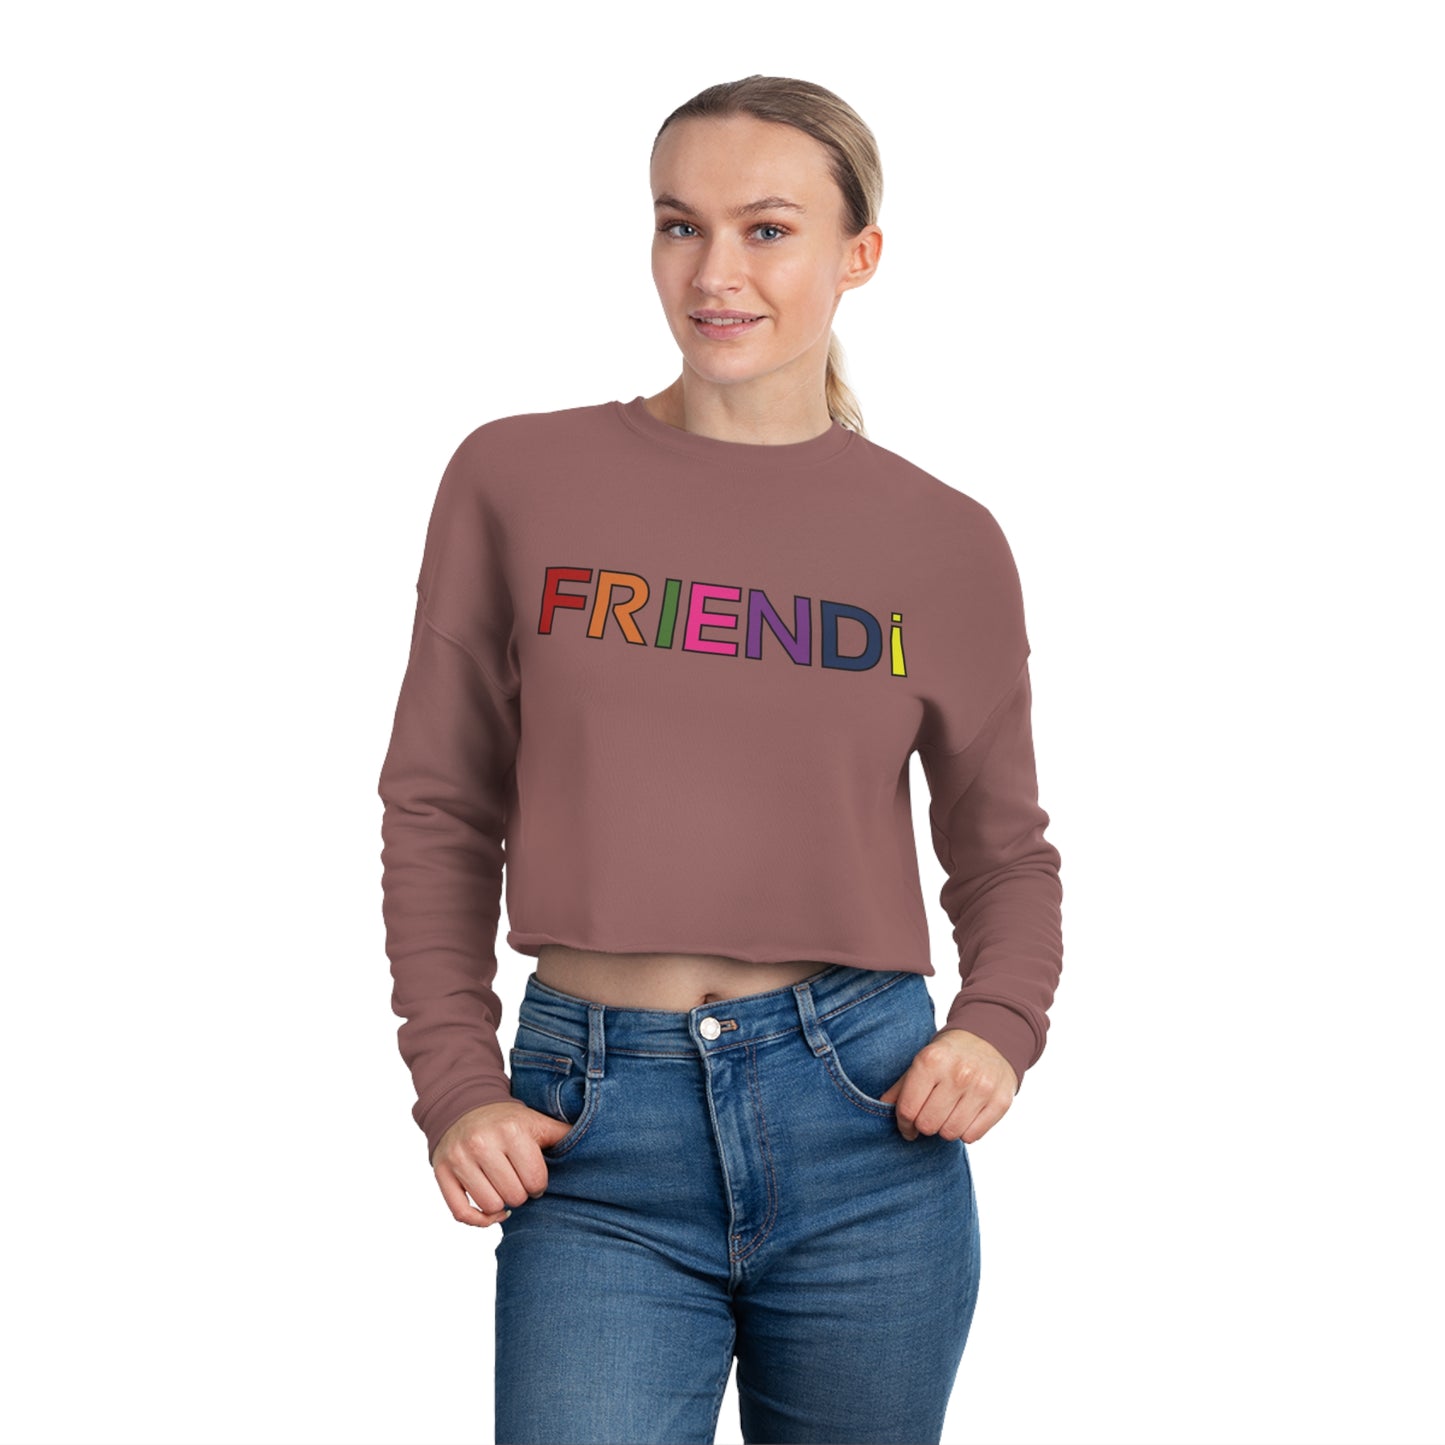 Friendi Cropped Sweatshirt